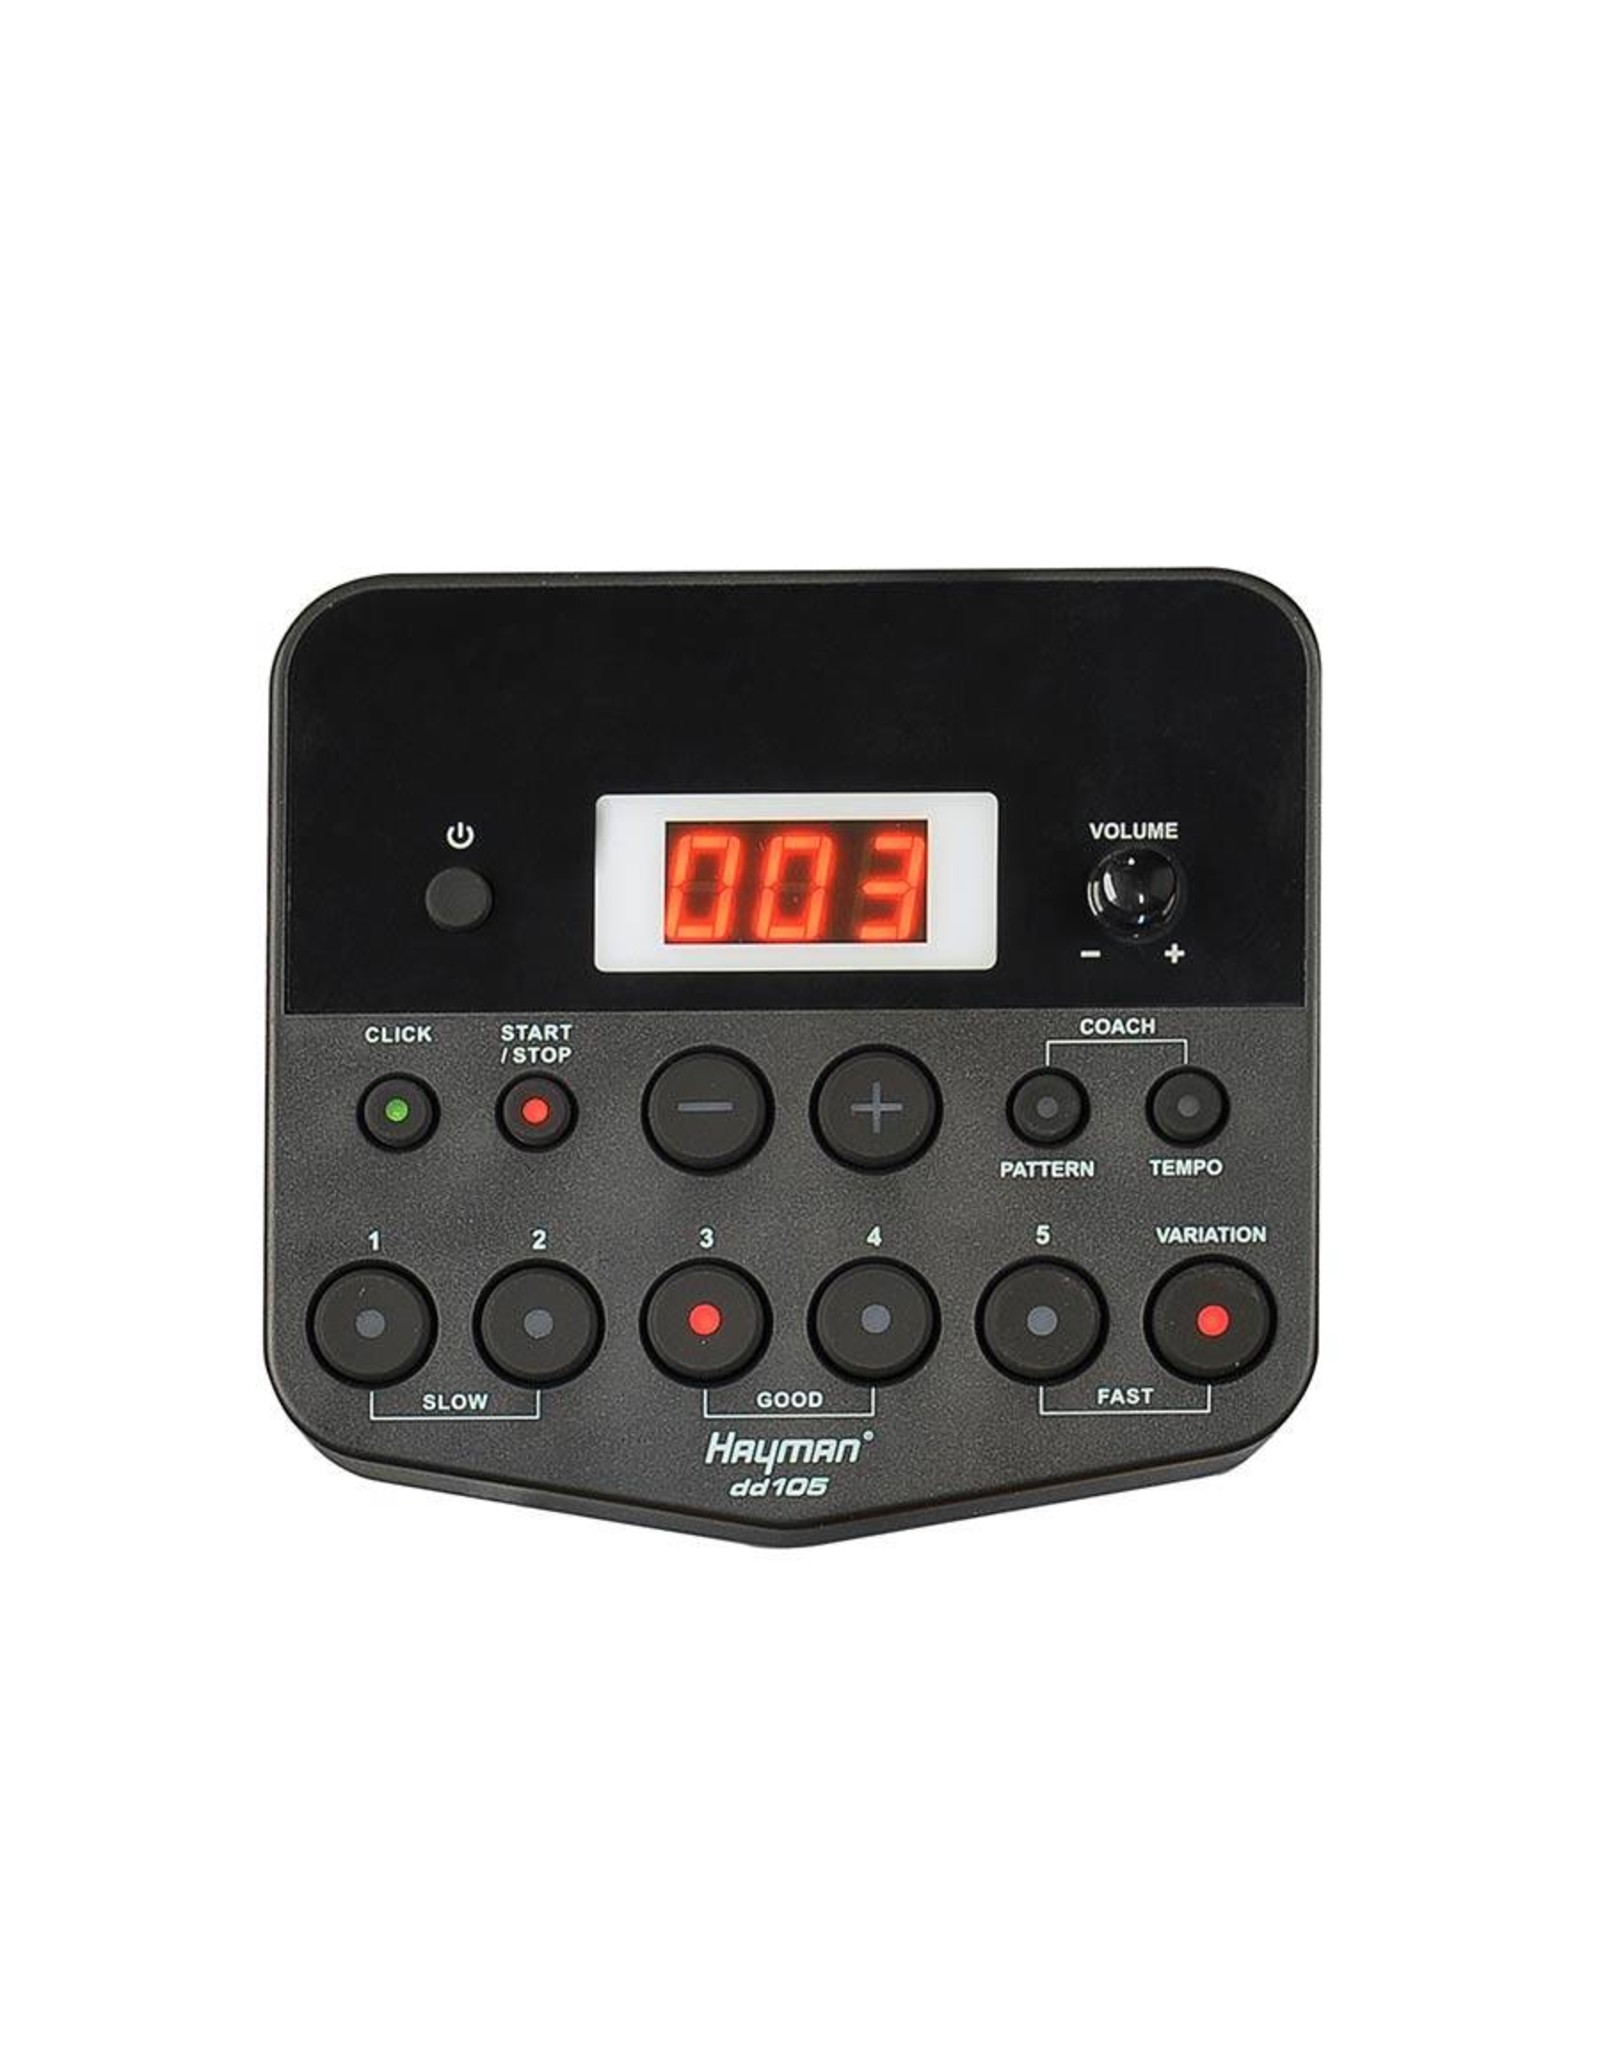 Hayman n DD-105 electronic drum kit